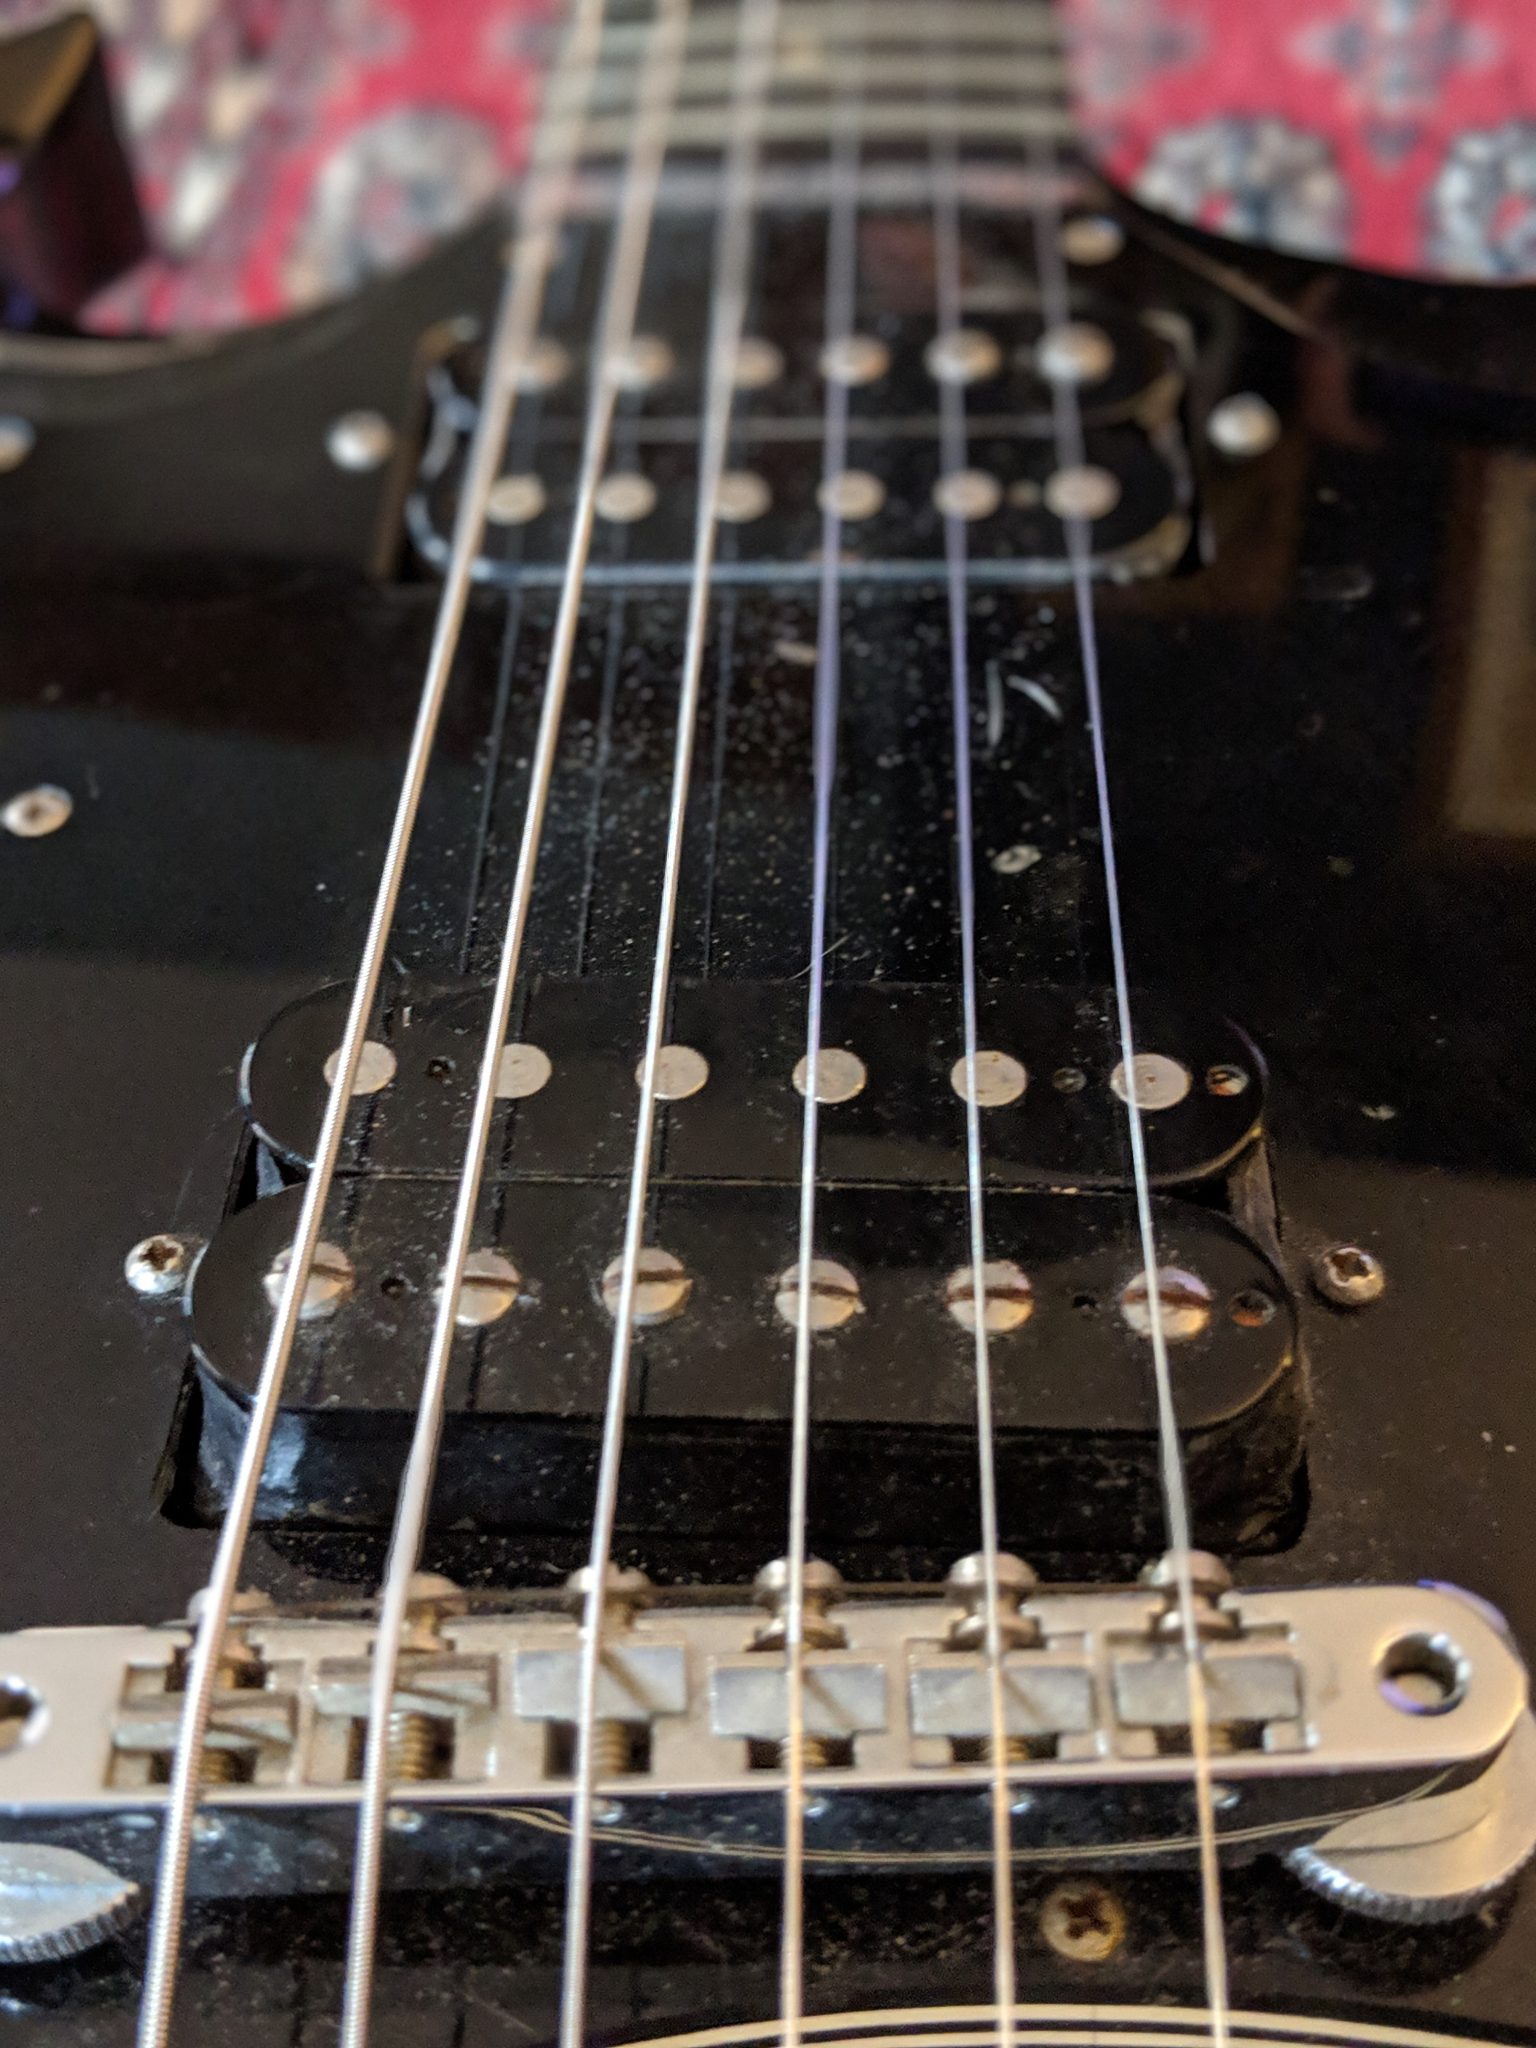 A closeup of a black guitar, overlooking bridge and pickups